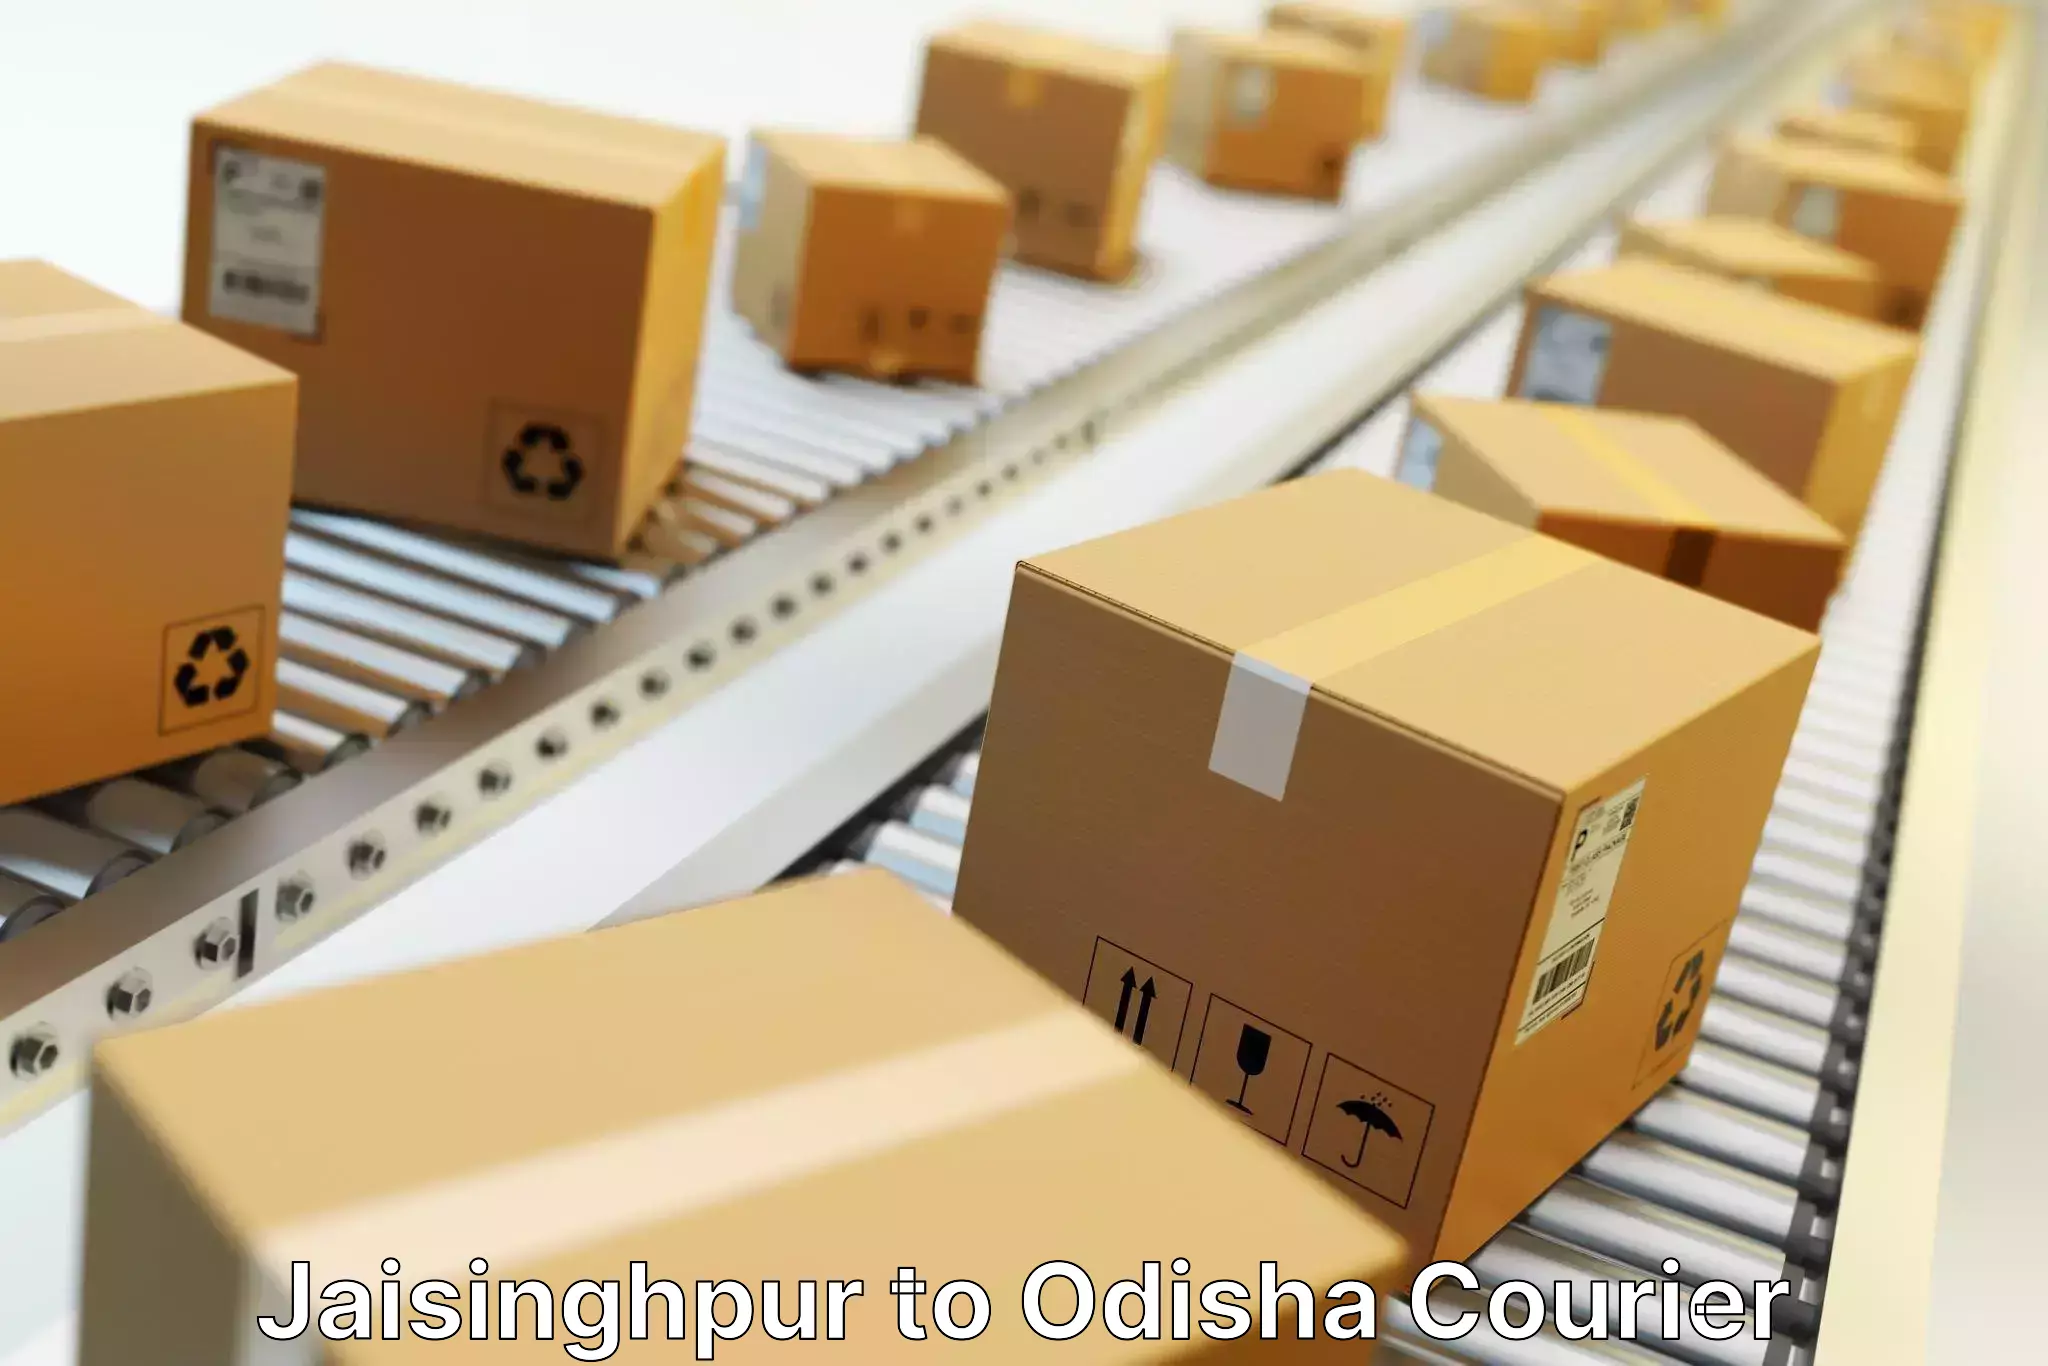 Express delivery network in Jaisinghpur to Sundergarh